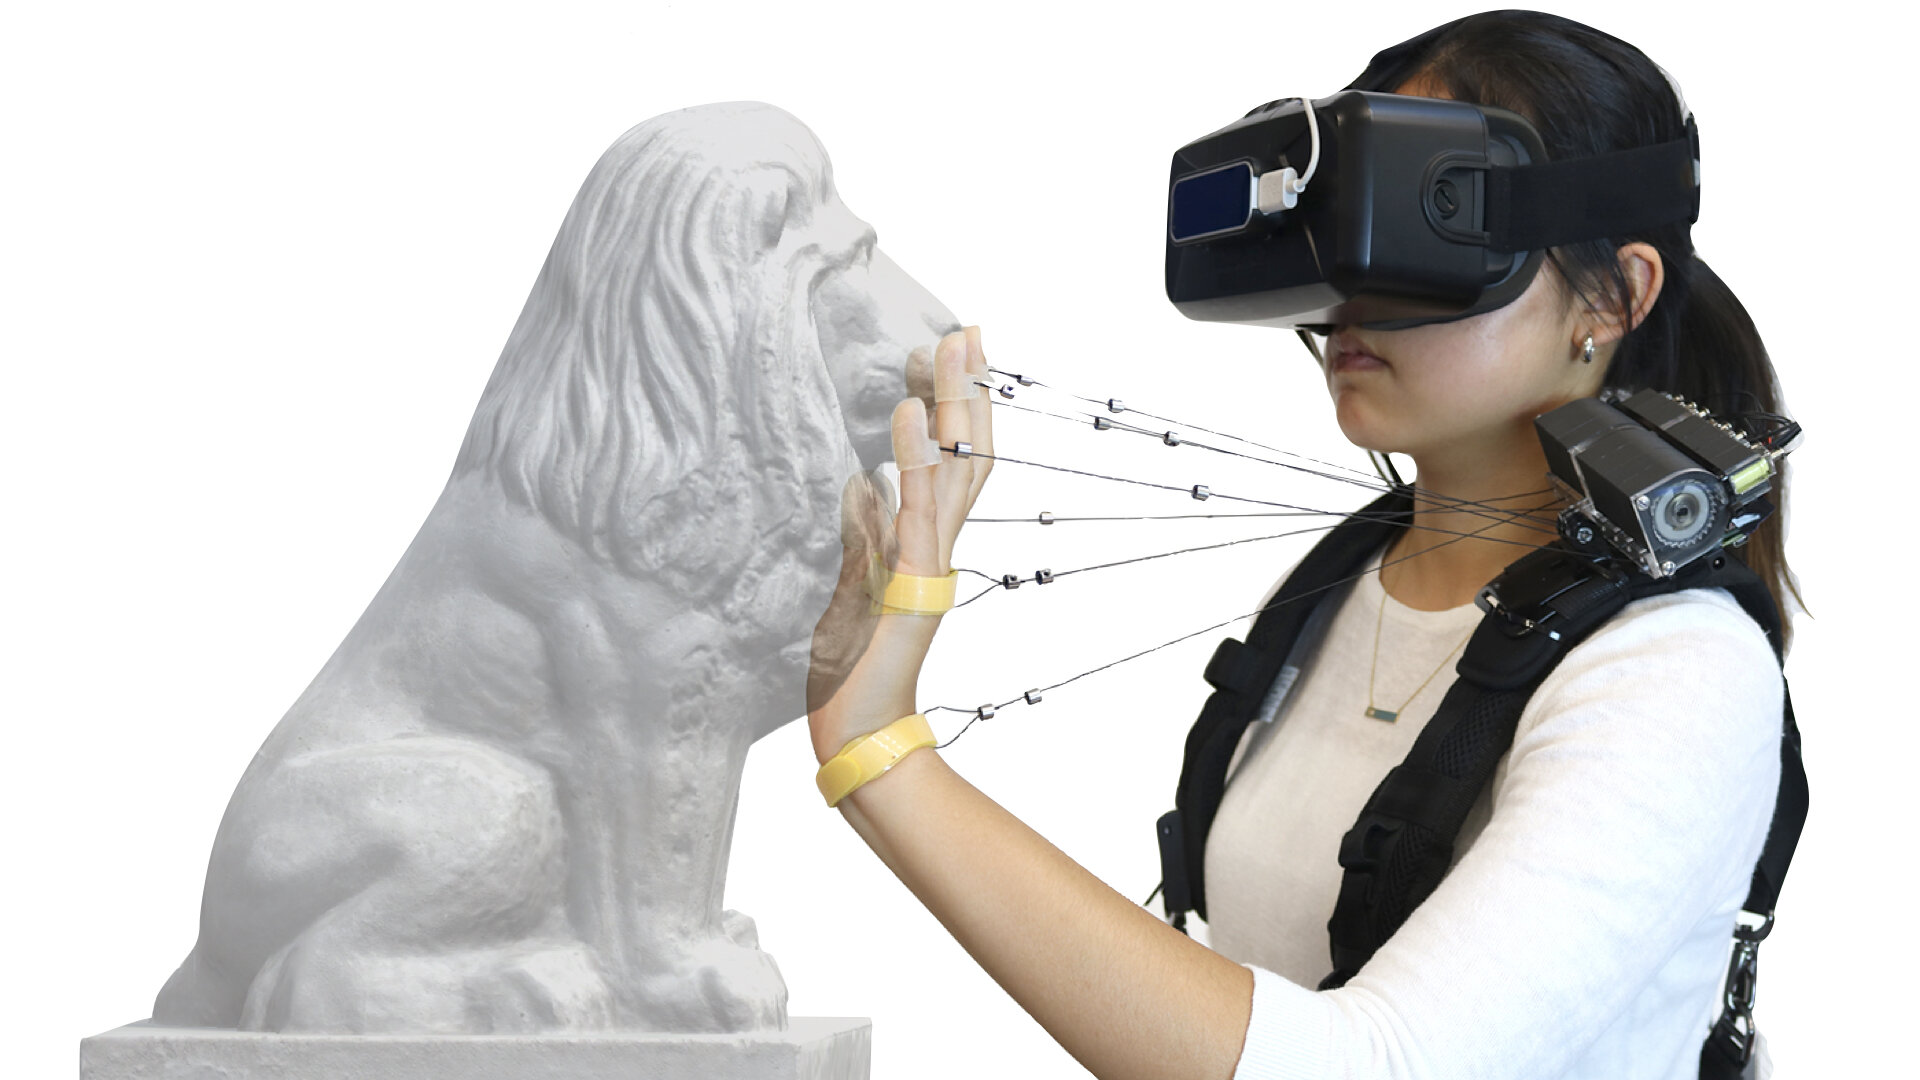 Virtual reality cartoon screen